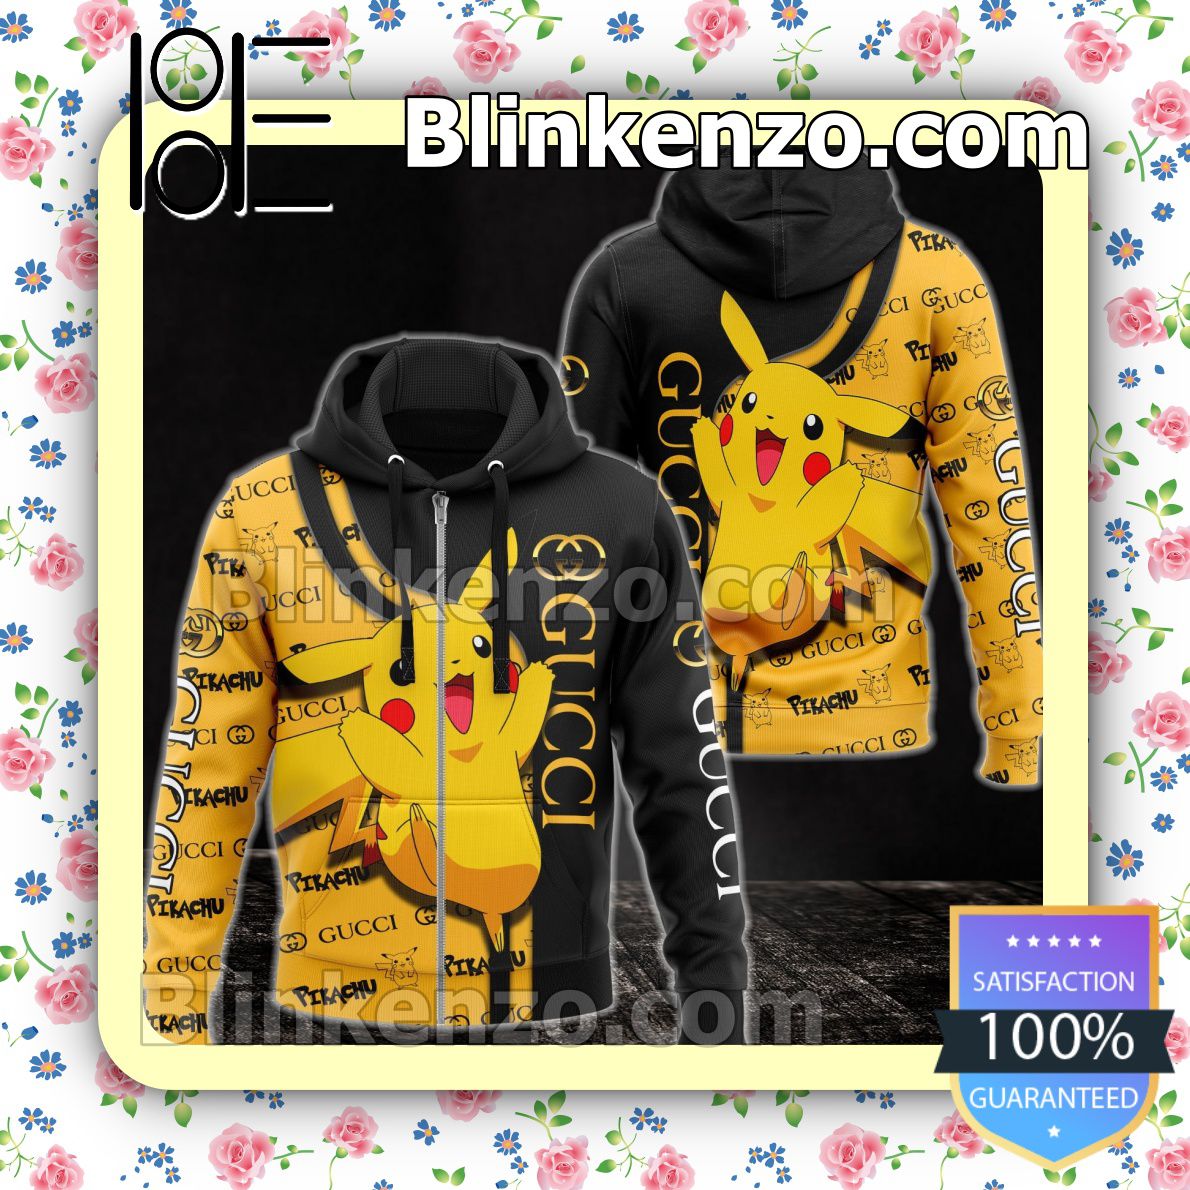 Present Gucci With Pikachu Black And Yellow Full-Zip Hooded Fleece Sweatshirt